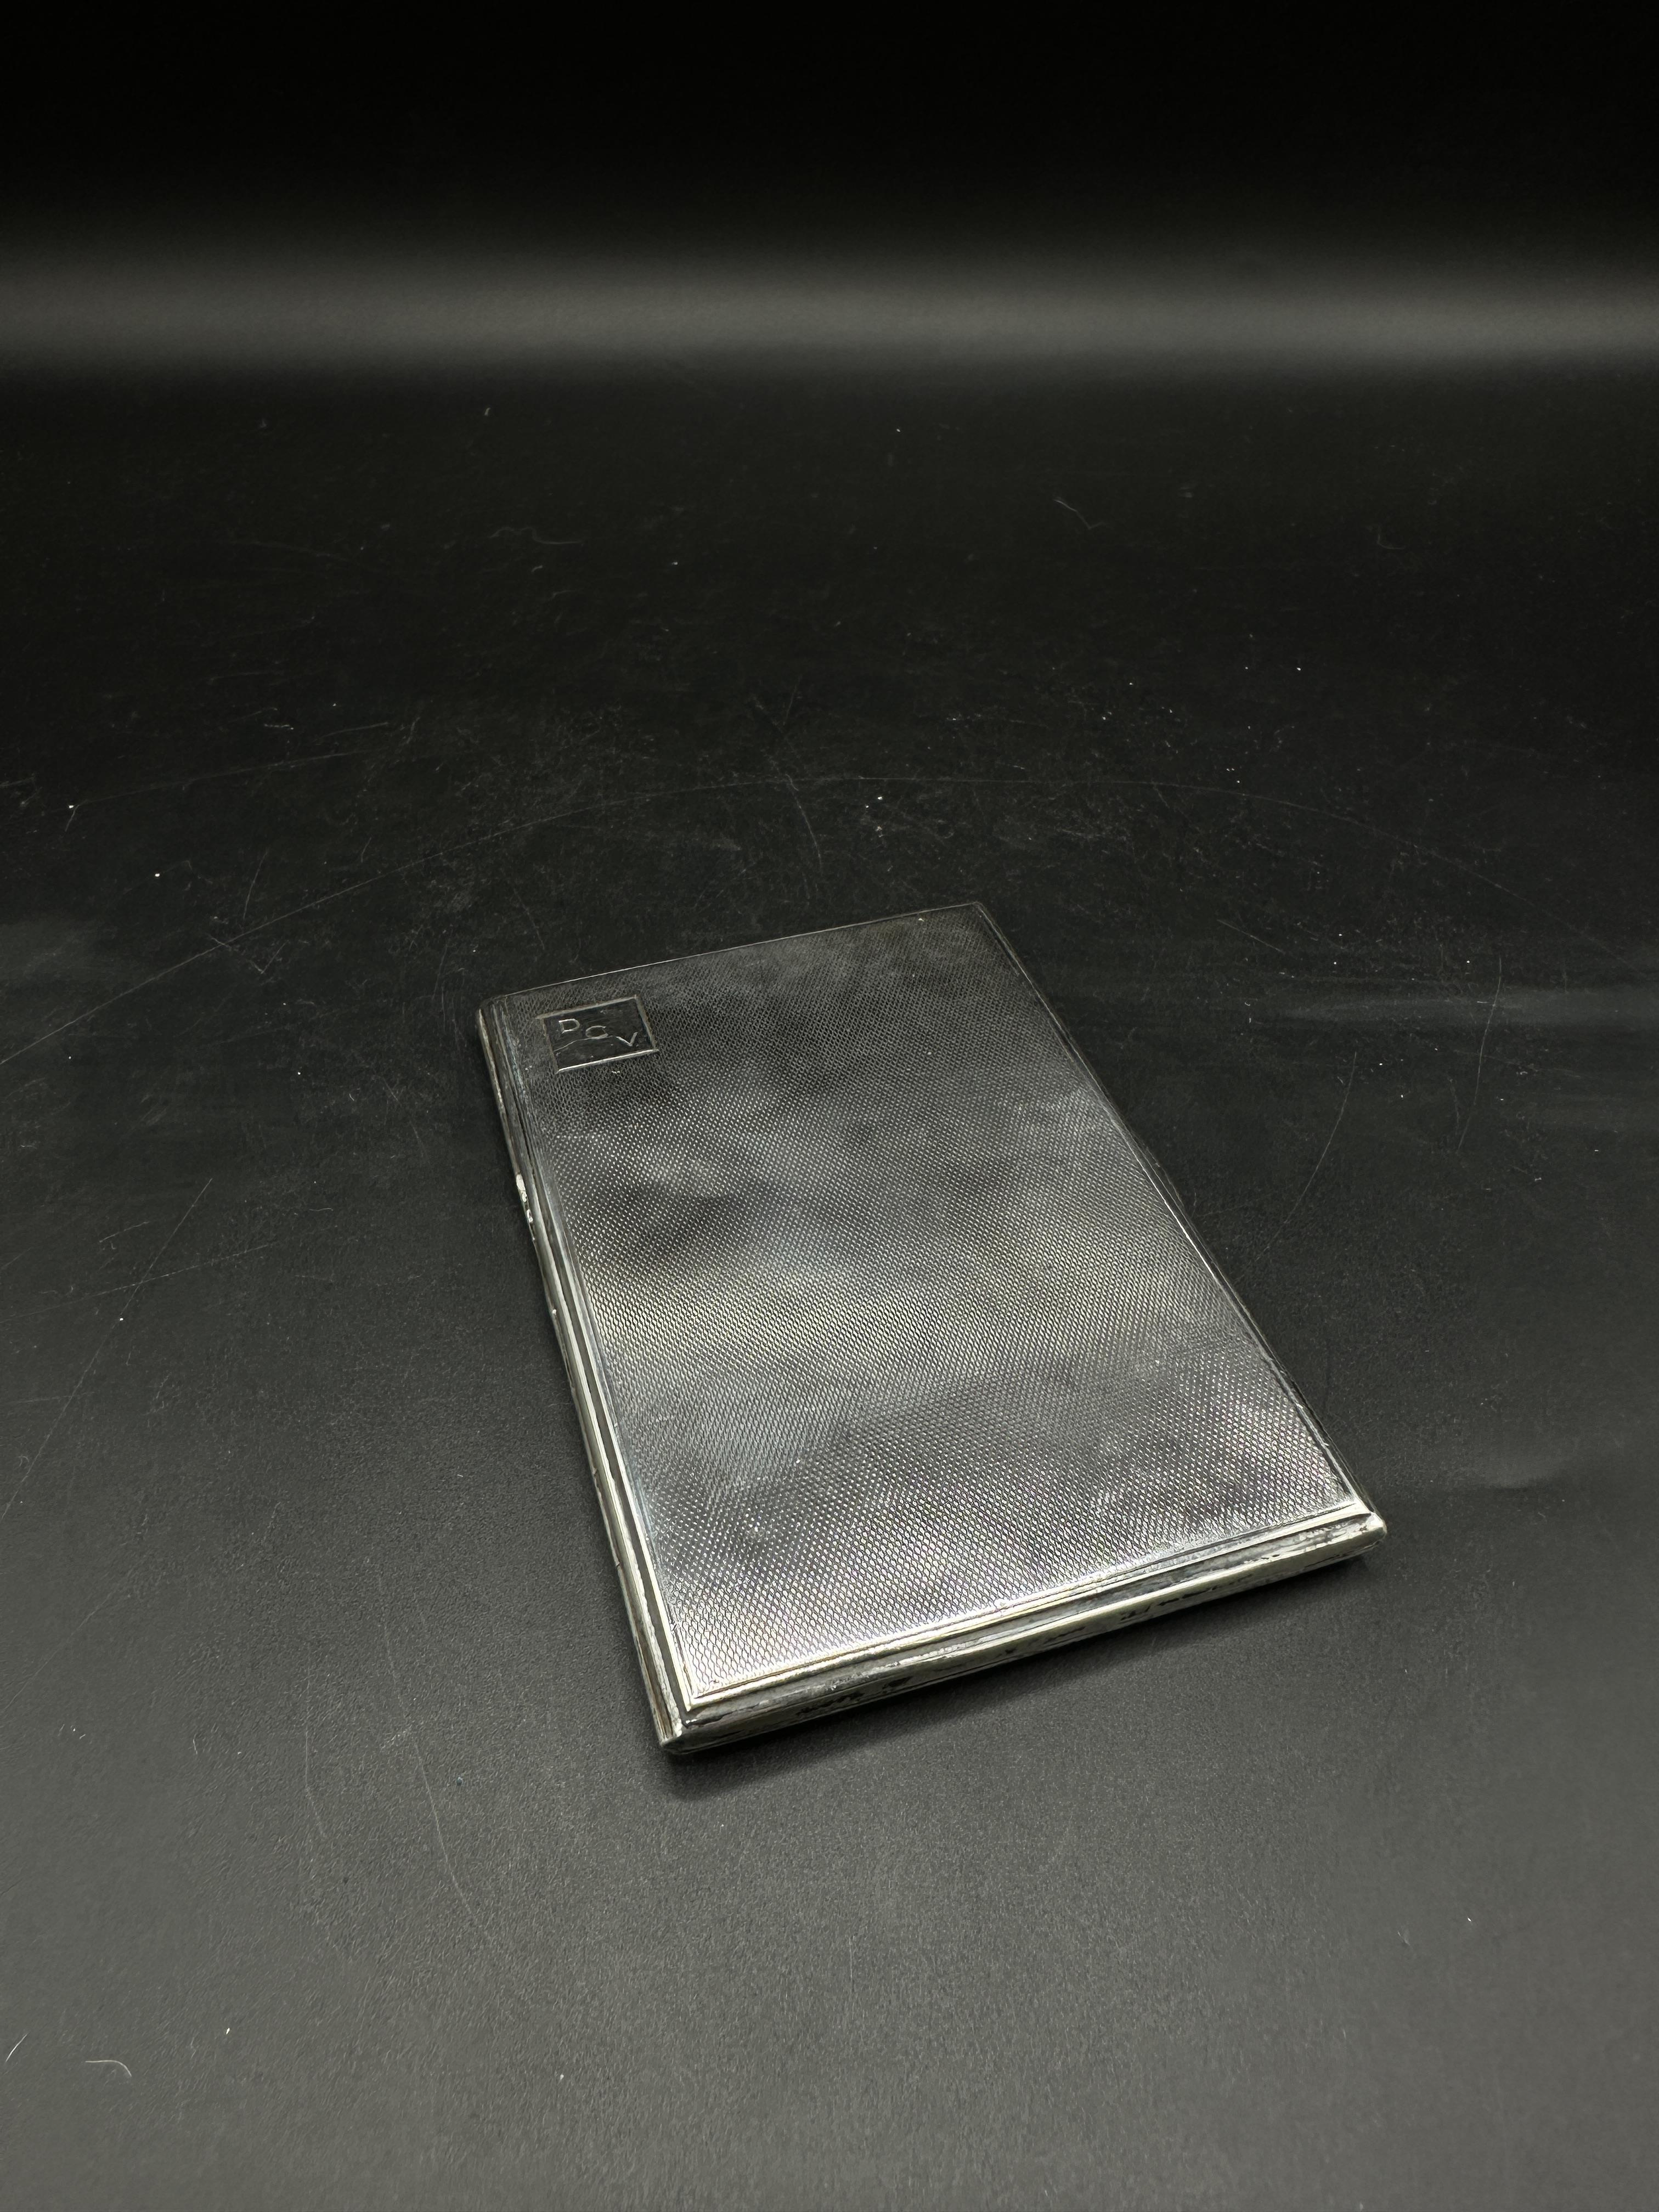 Silver engine turned cigarette case - Image 5 of 5